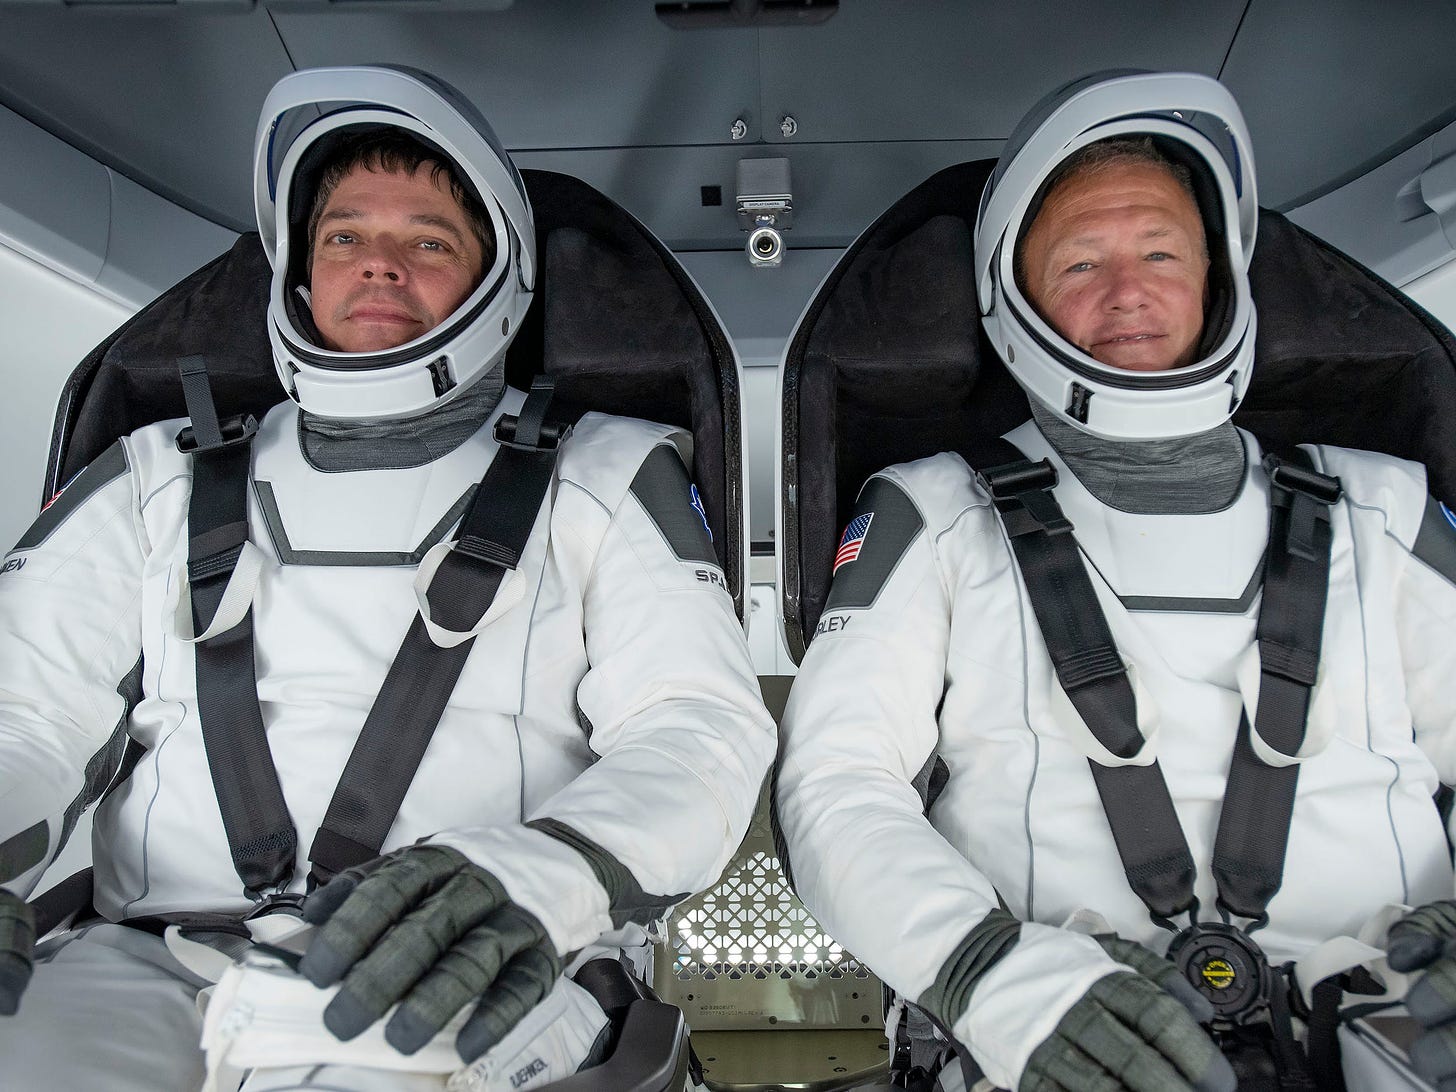 nasa astronauts bob behnken doug hurley spacex spacesuits crew dragon spaceship seats training demo2 demo 2